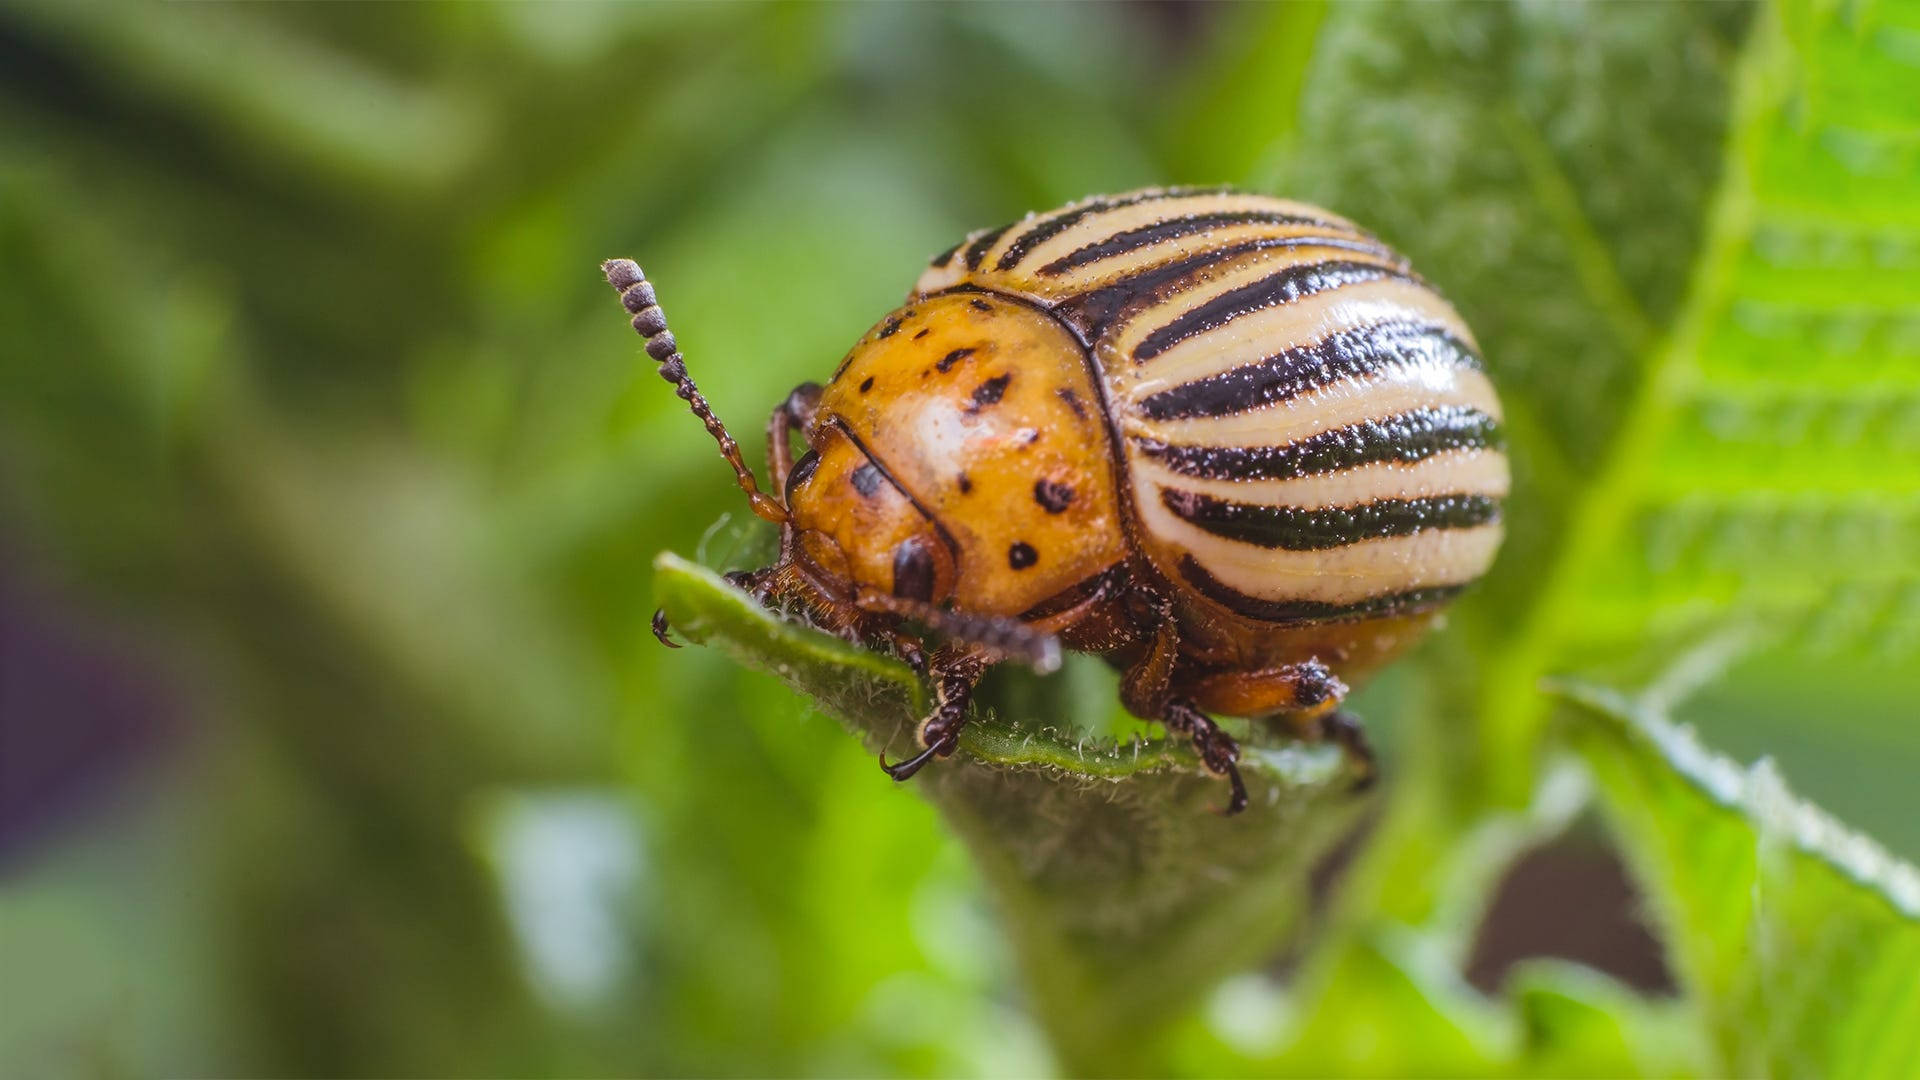 Close-Up Shot of a Vibrant Colorado Potato Beetle Wallpaper